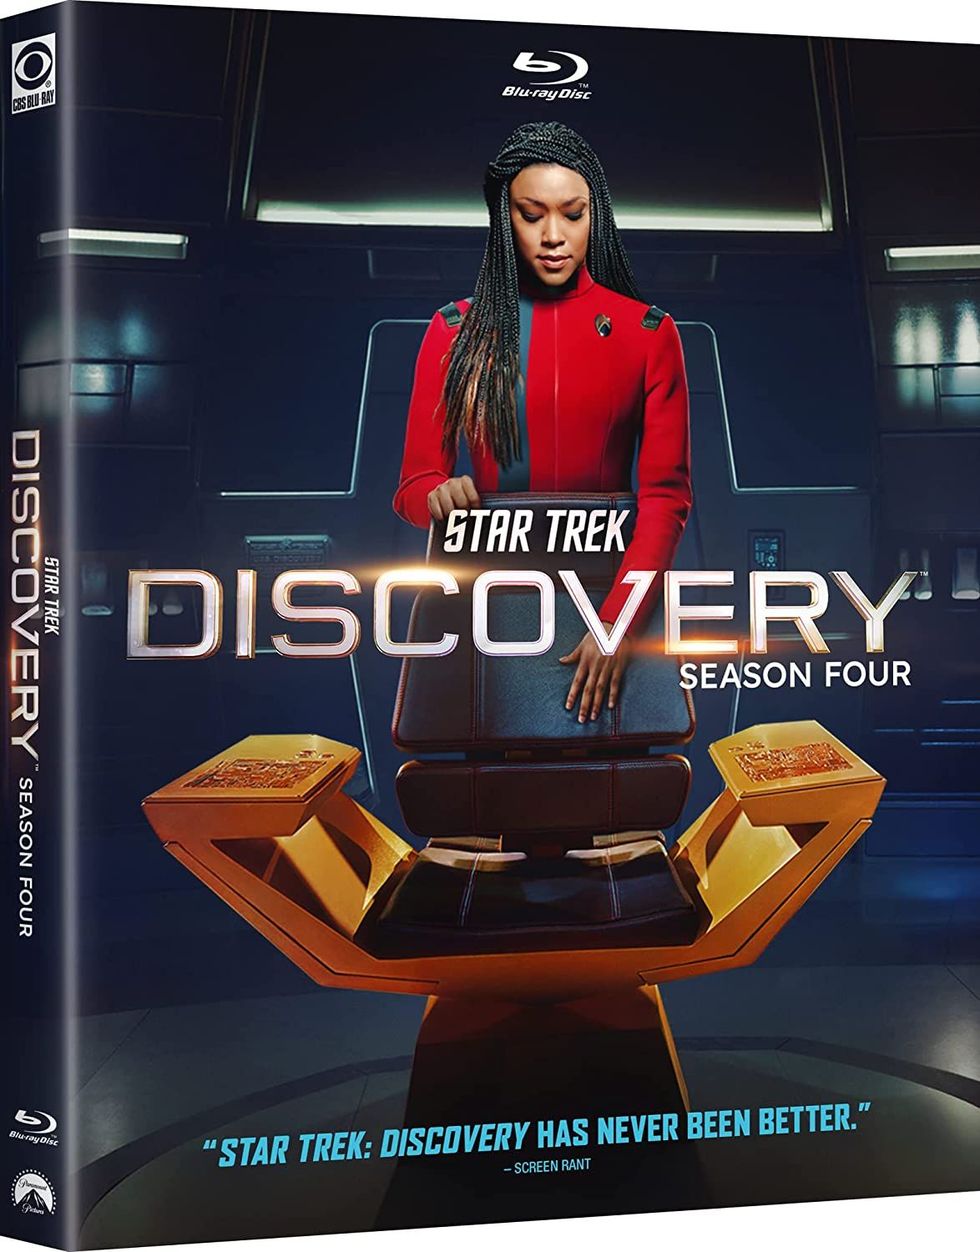 Star Trek: Discovery season 4 [DVD]